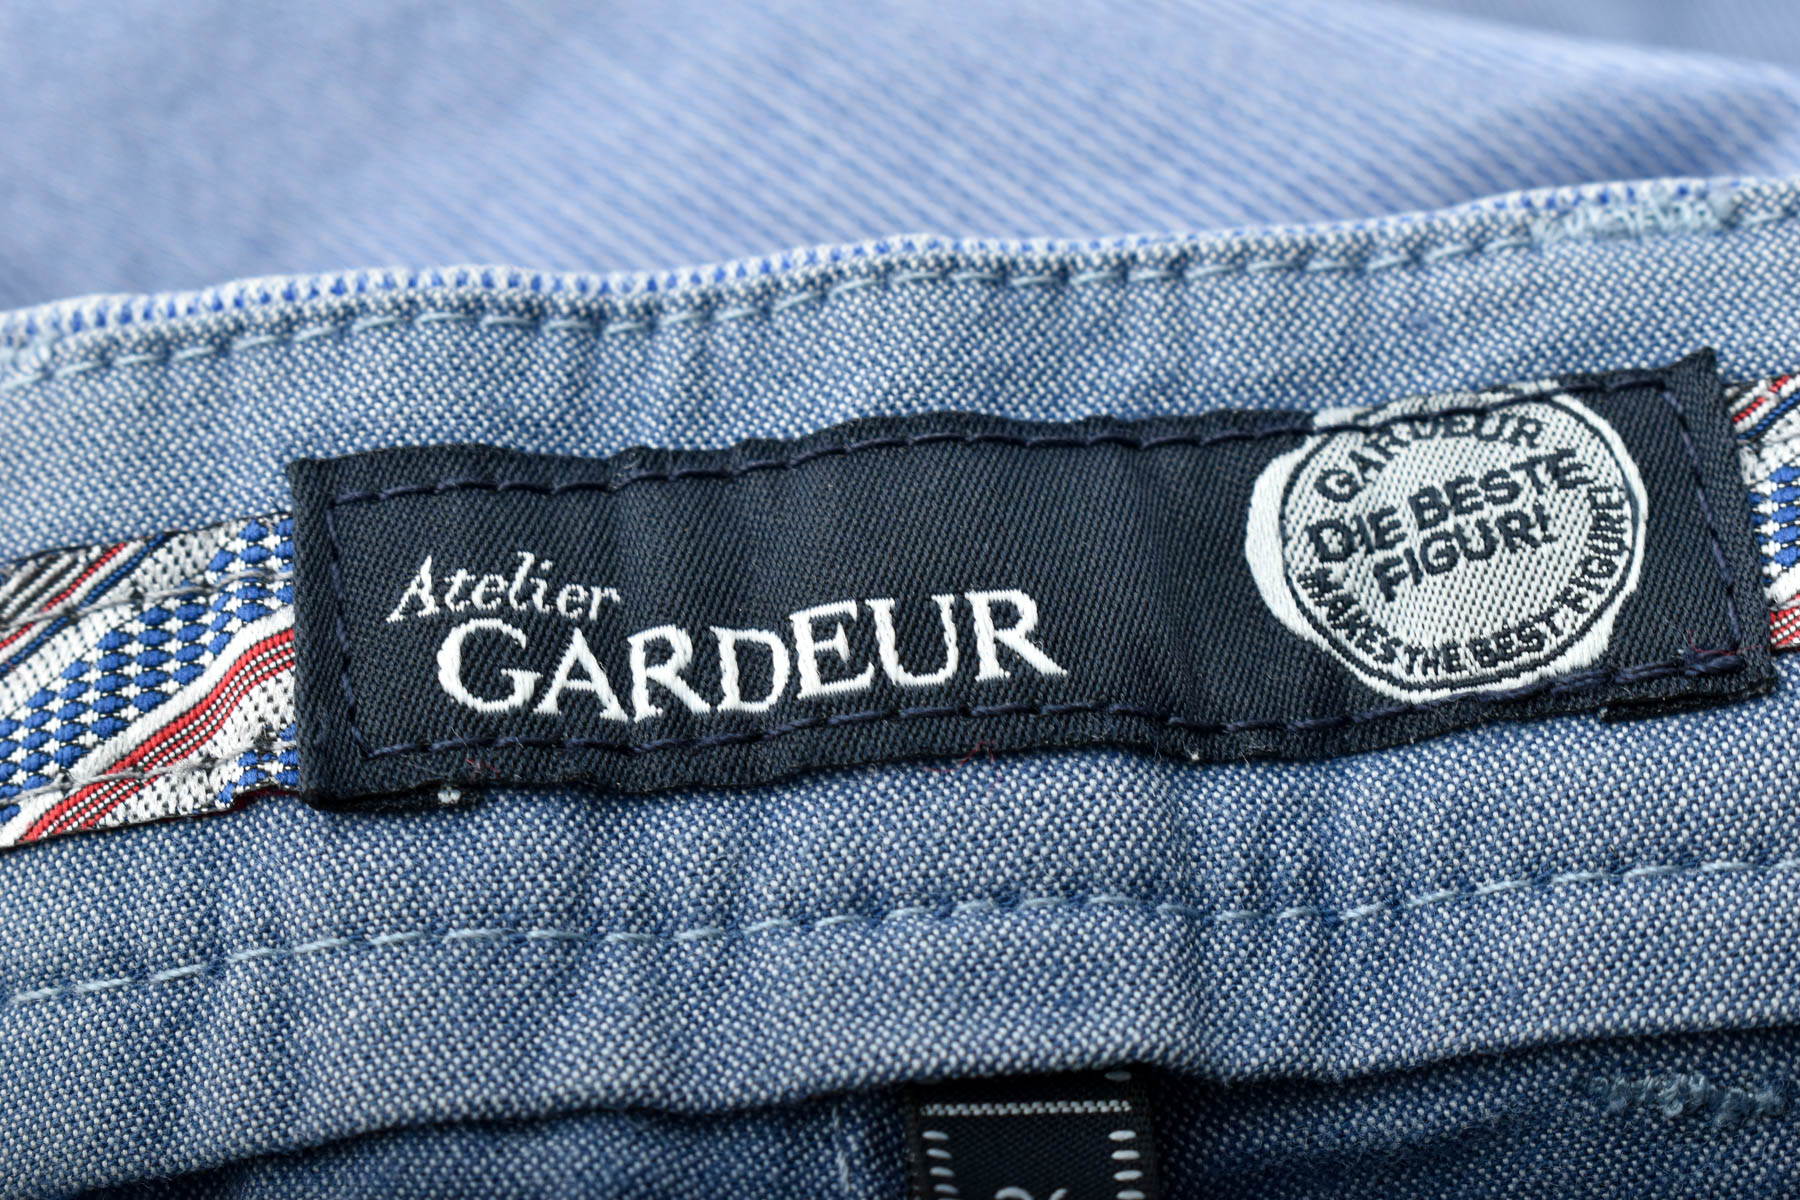 Men's trousers - Atelier Gardeur - 2